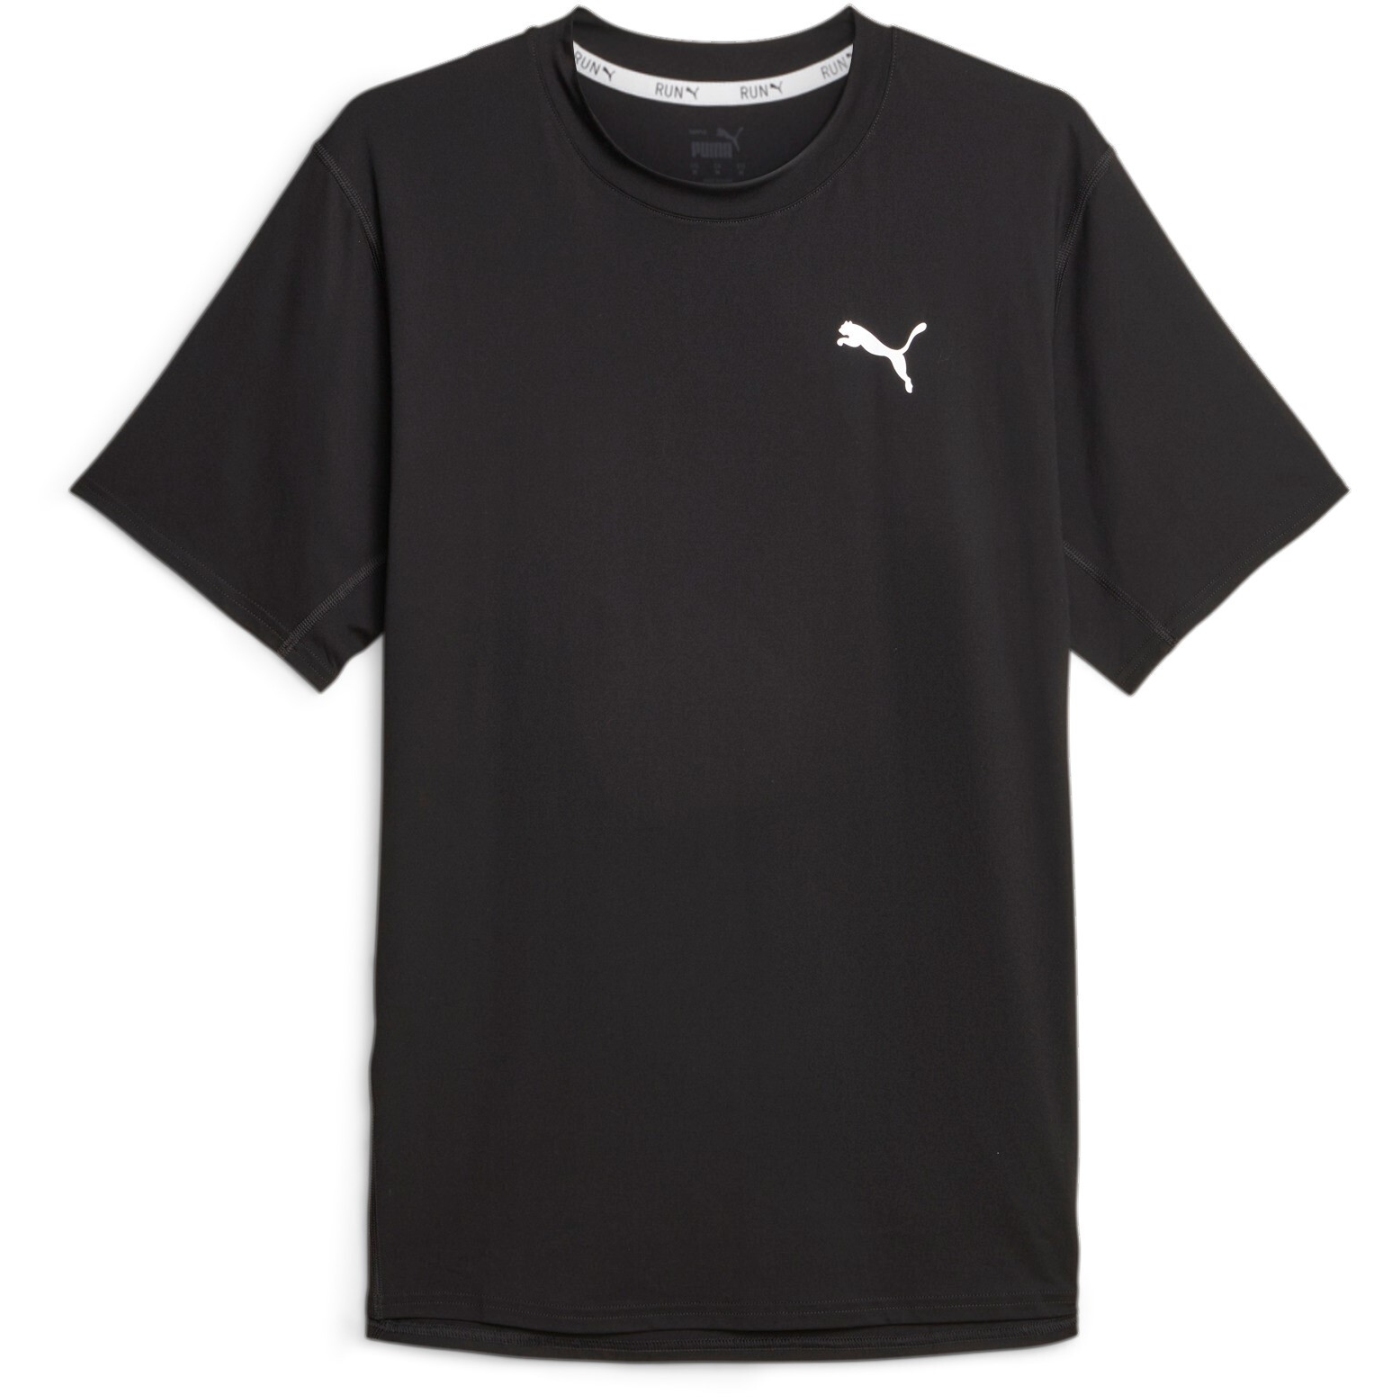 Puma T-Shirt Running Homme - Cloudspun - Puma Black - BIKE24